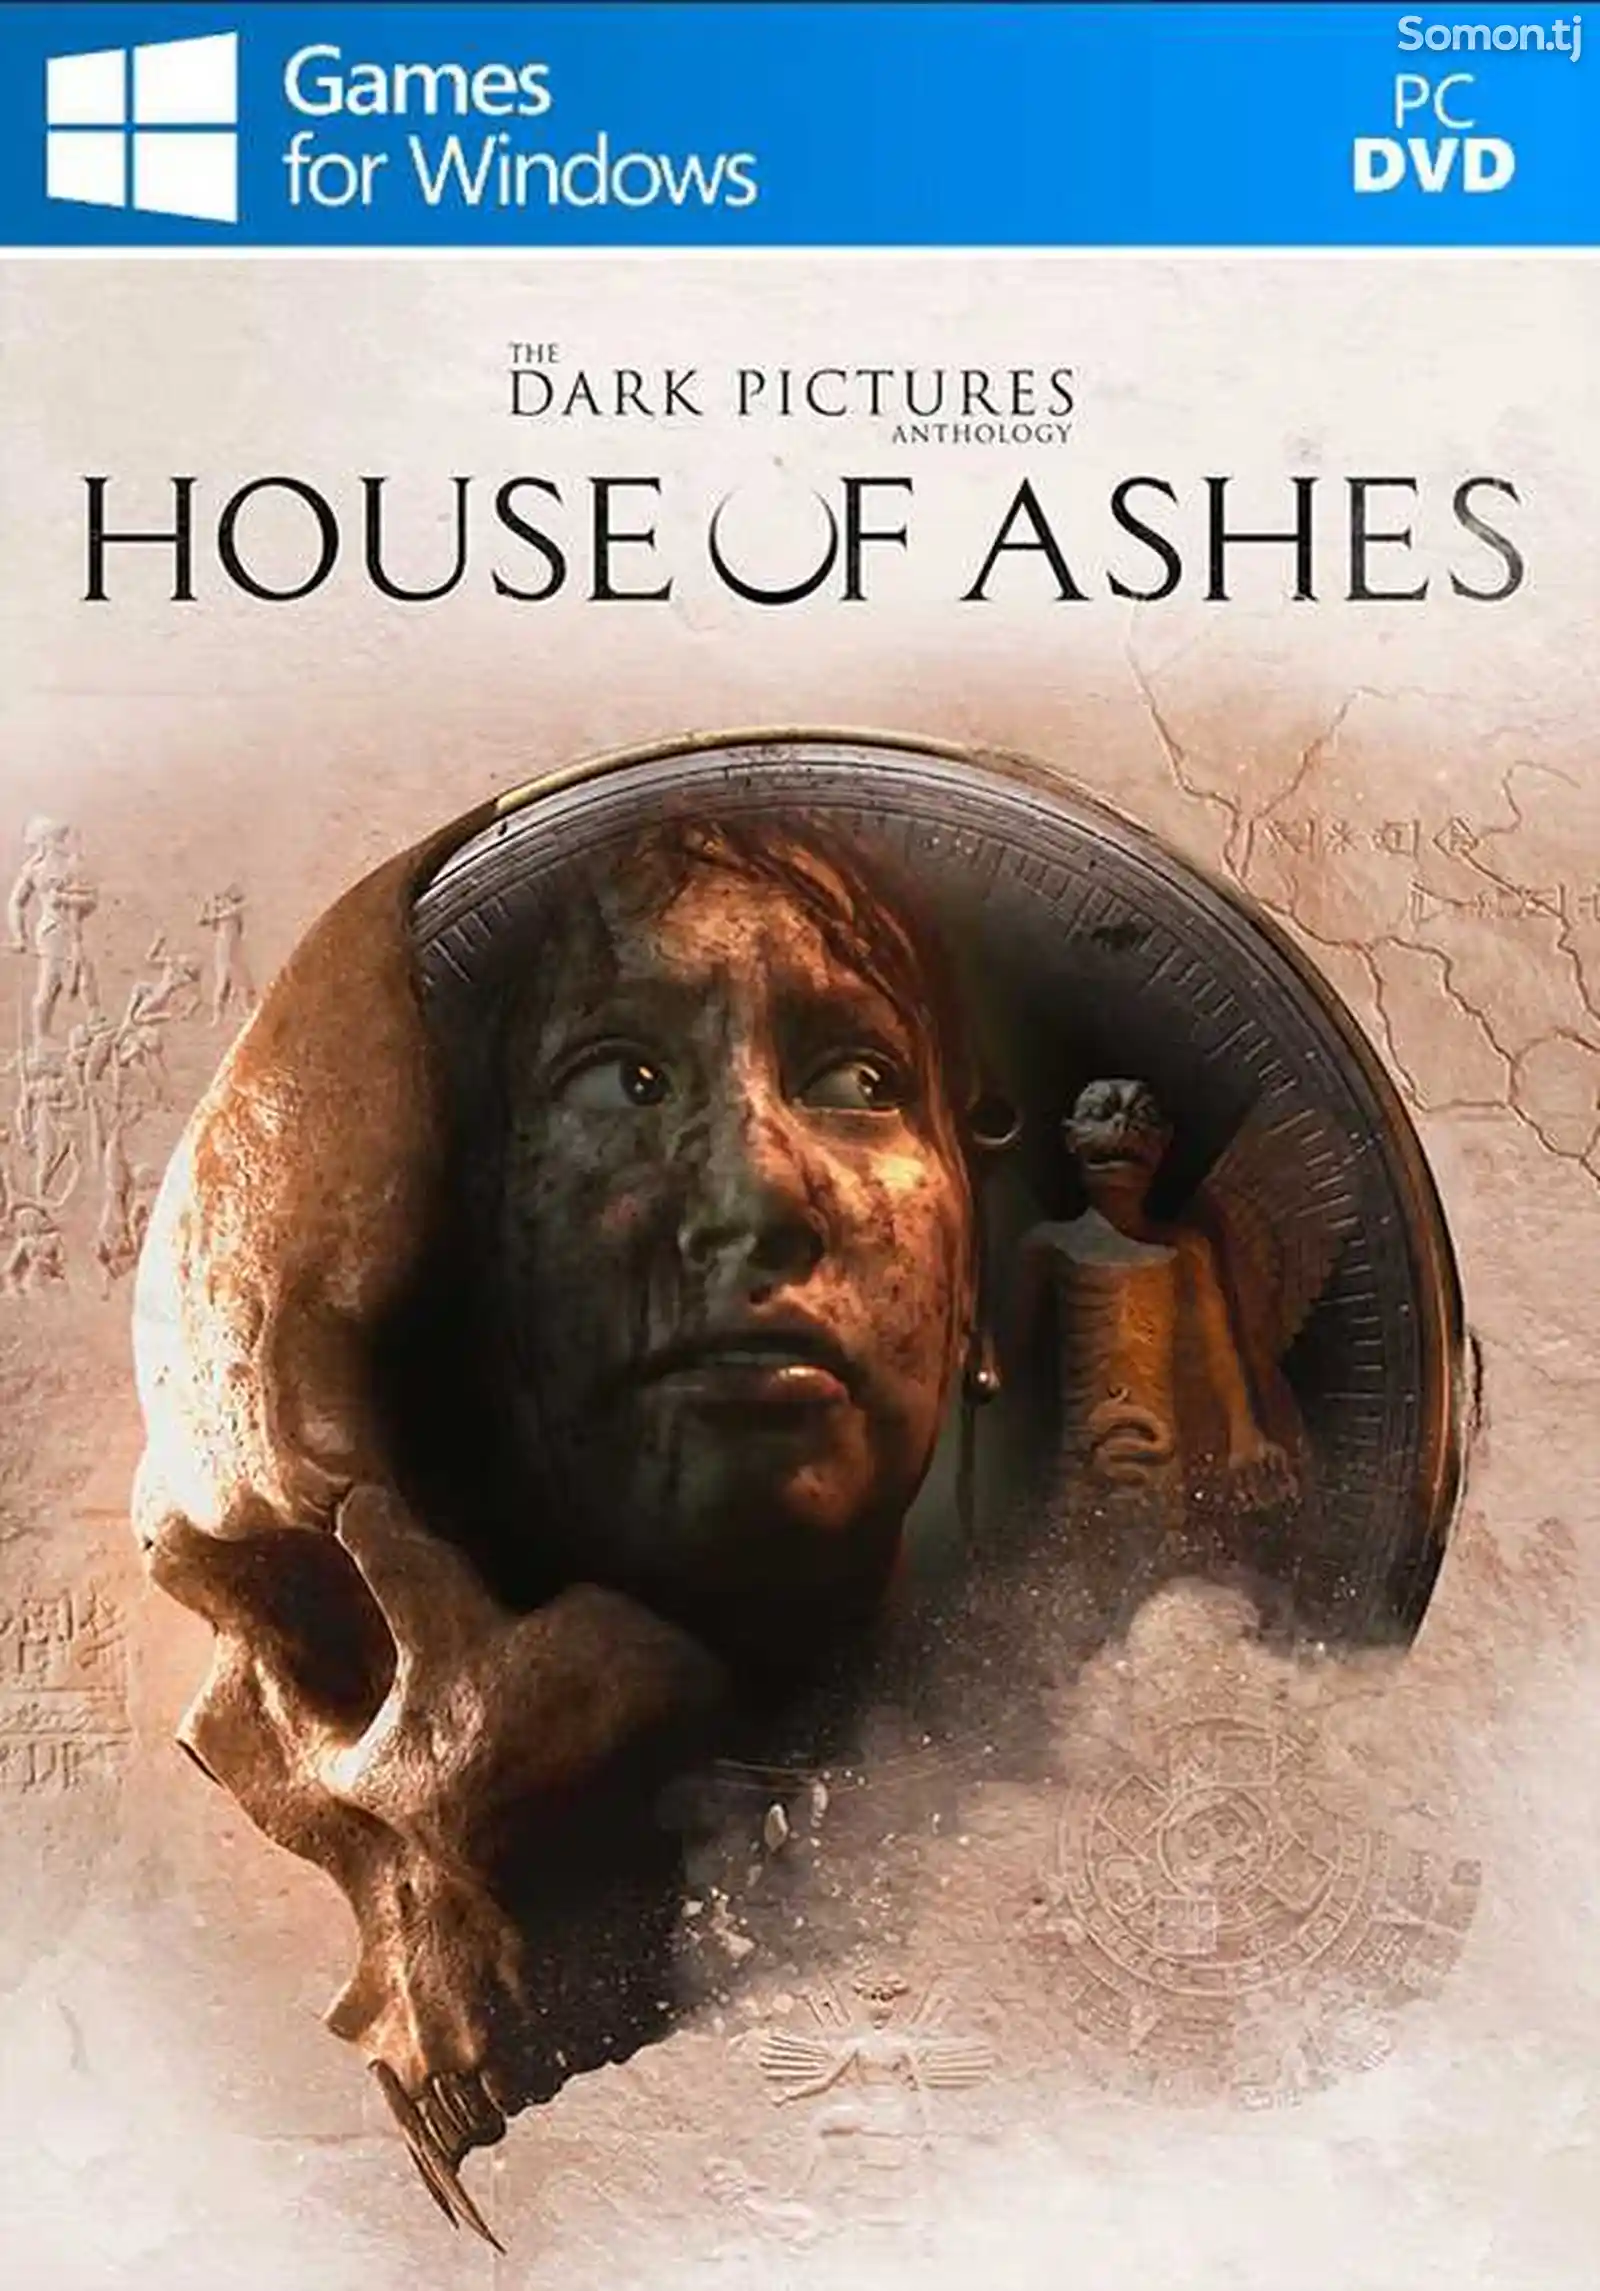 Игра The dark pictures anthology house of ashes для компьютера-пк-pc-1